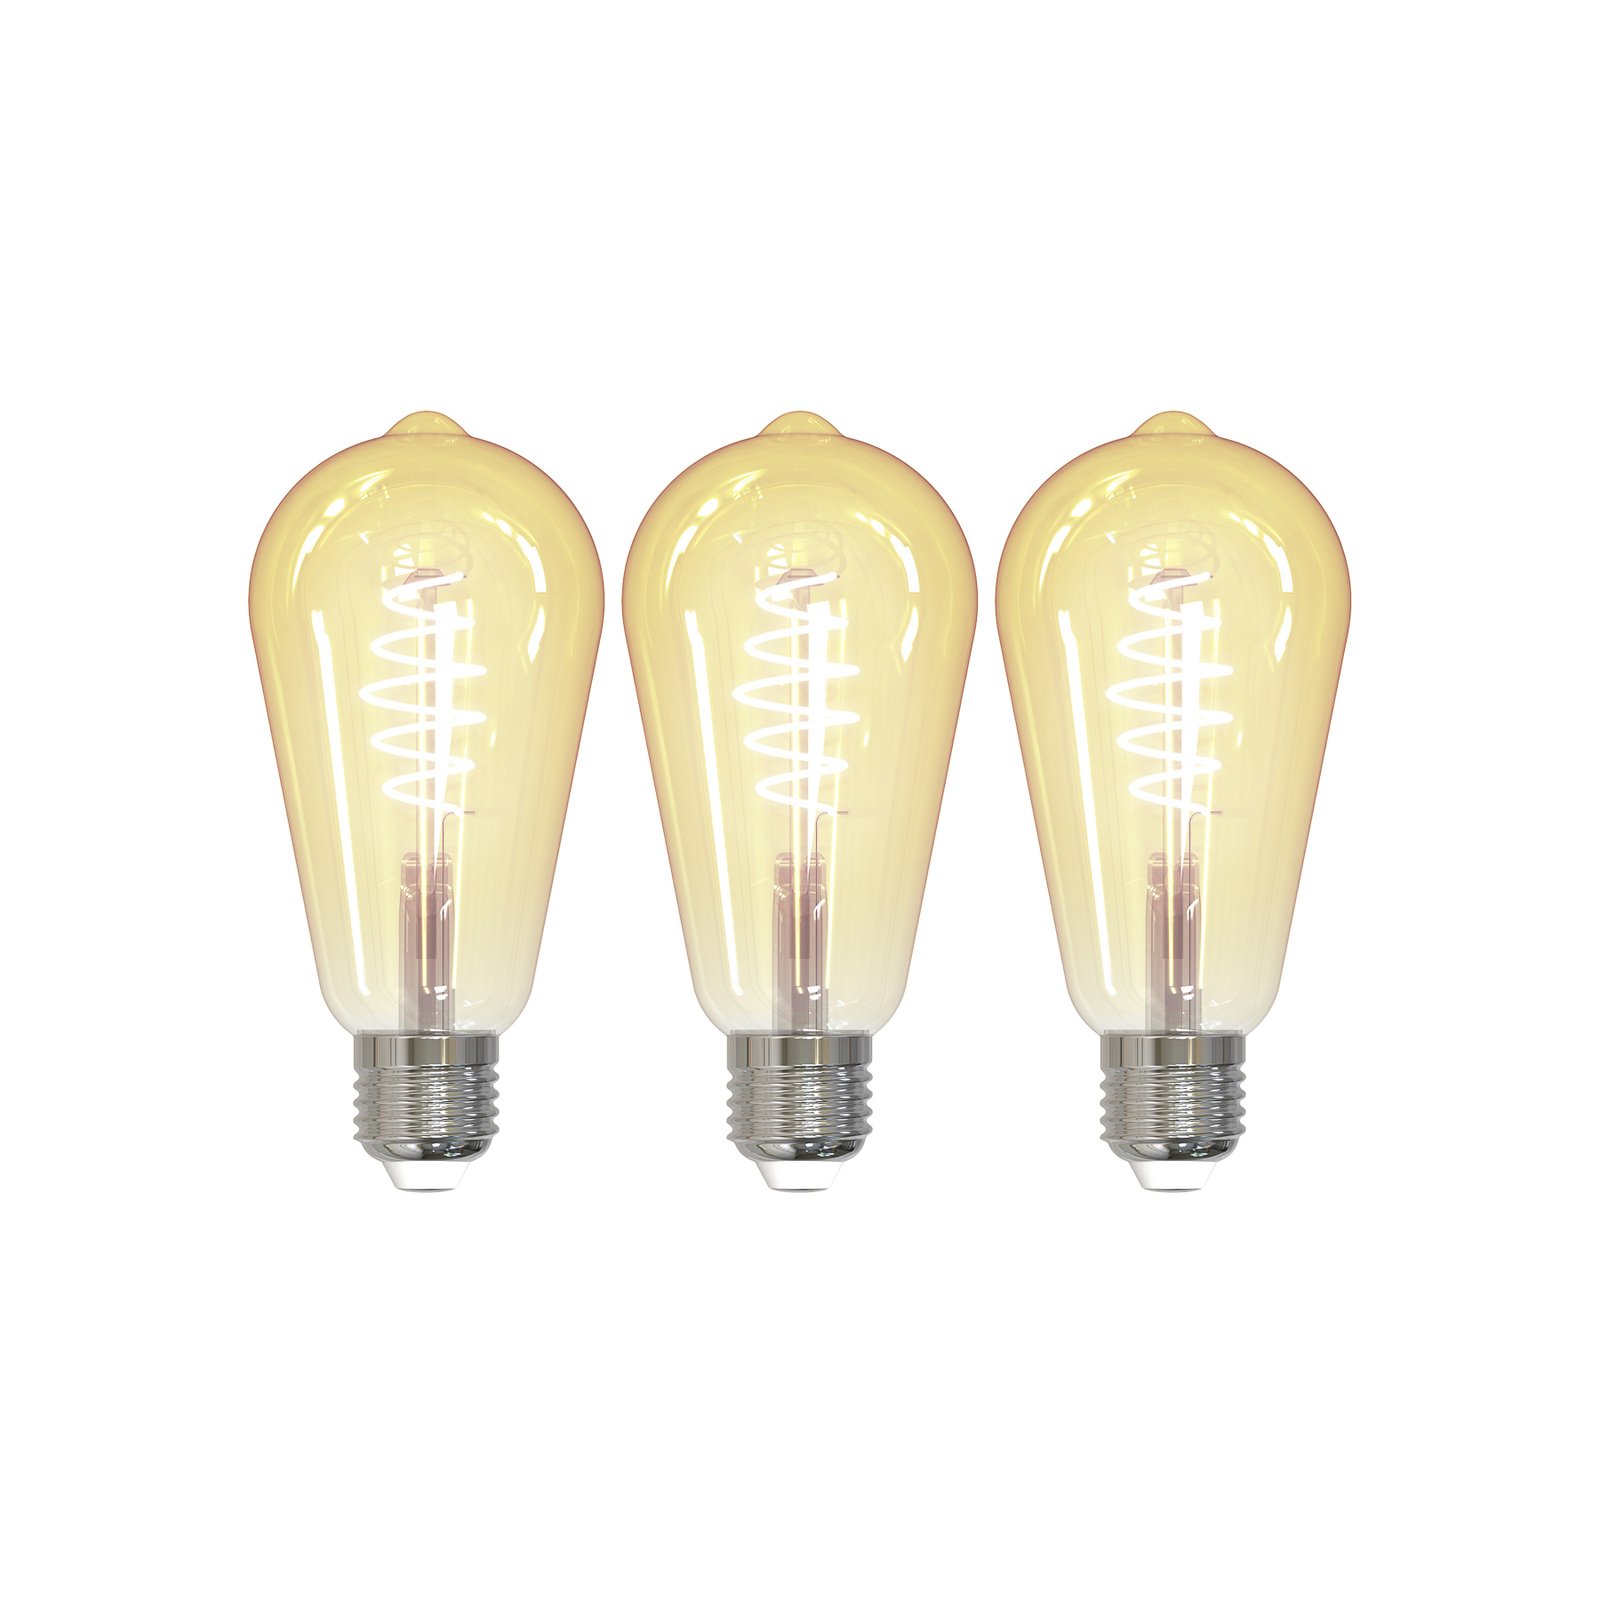 Prios LED-Lampe E27 ST64 4,9W WLAN amber klar, 3er